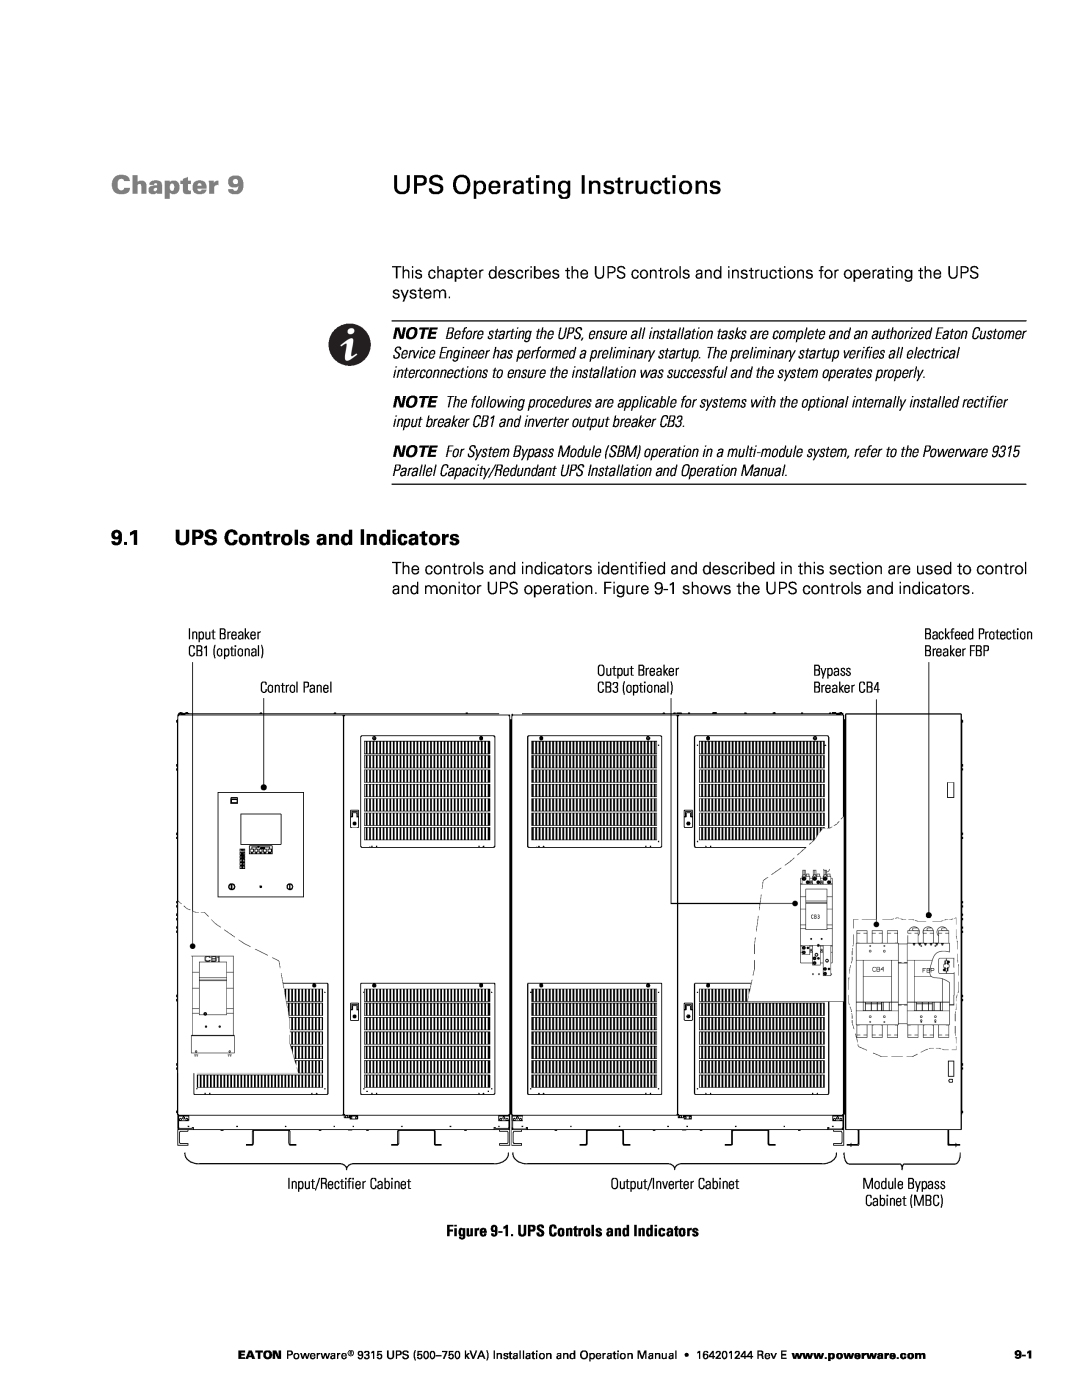 Powerware Powerware 9315 operation manual UPS Operating Instructions, Chapter, ‐1. UPS Controls and Indicators 